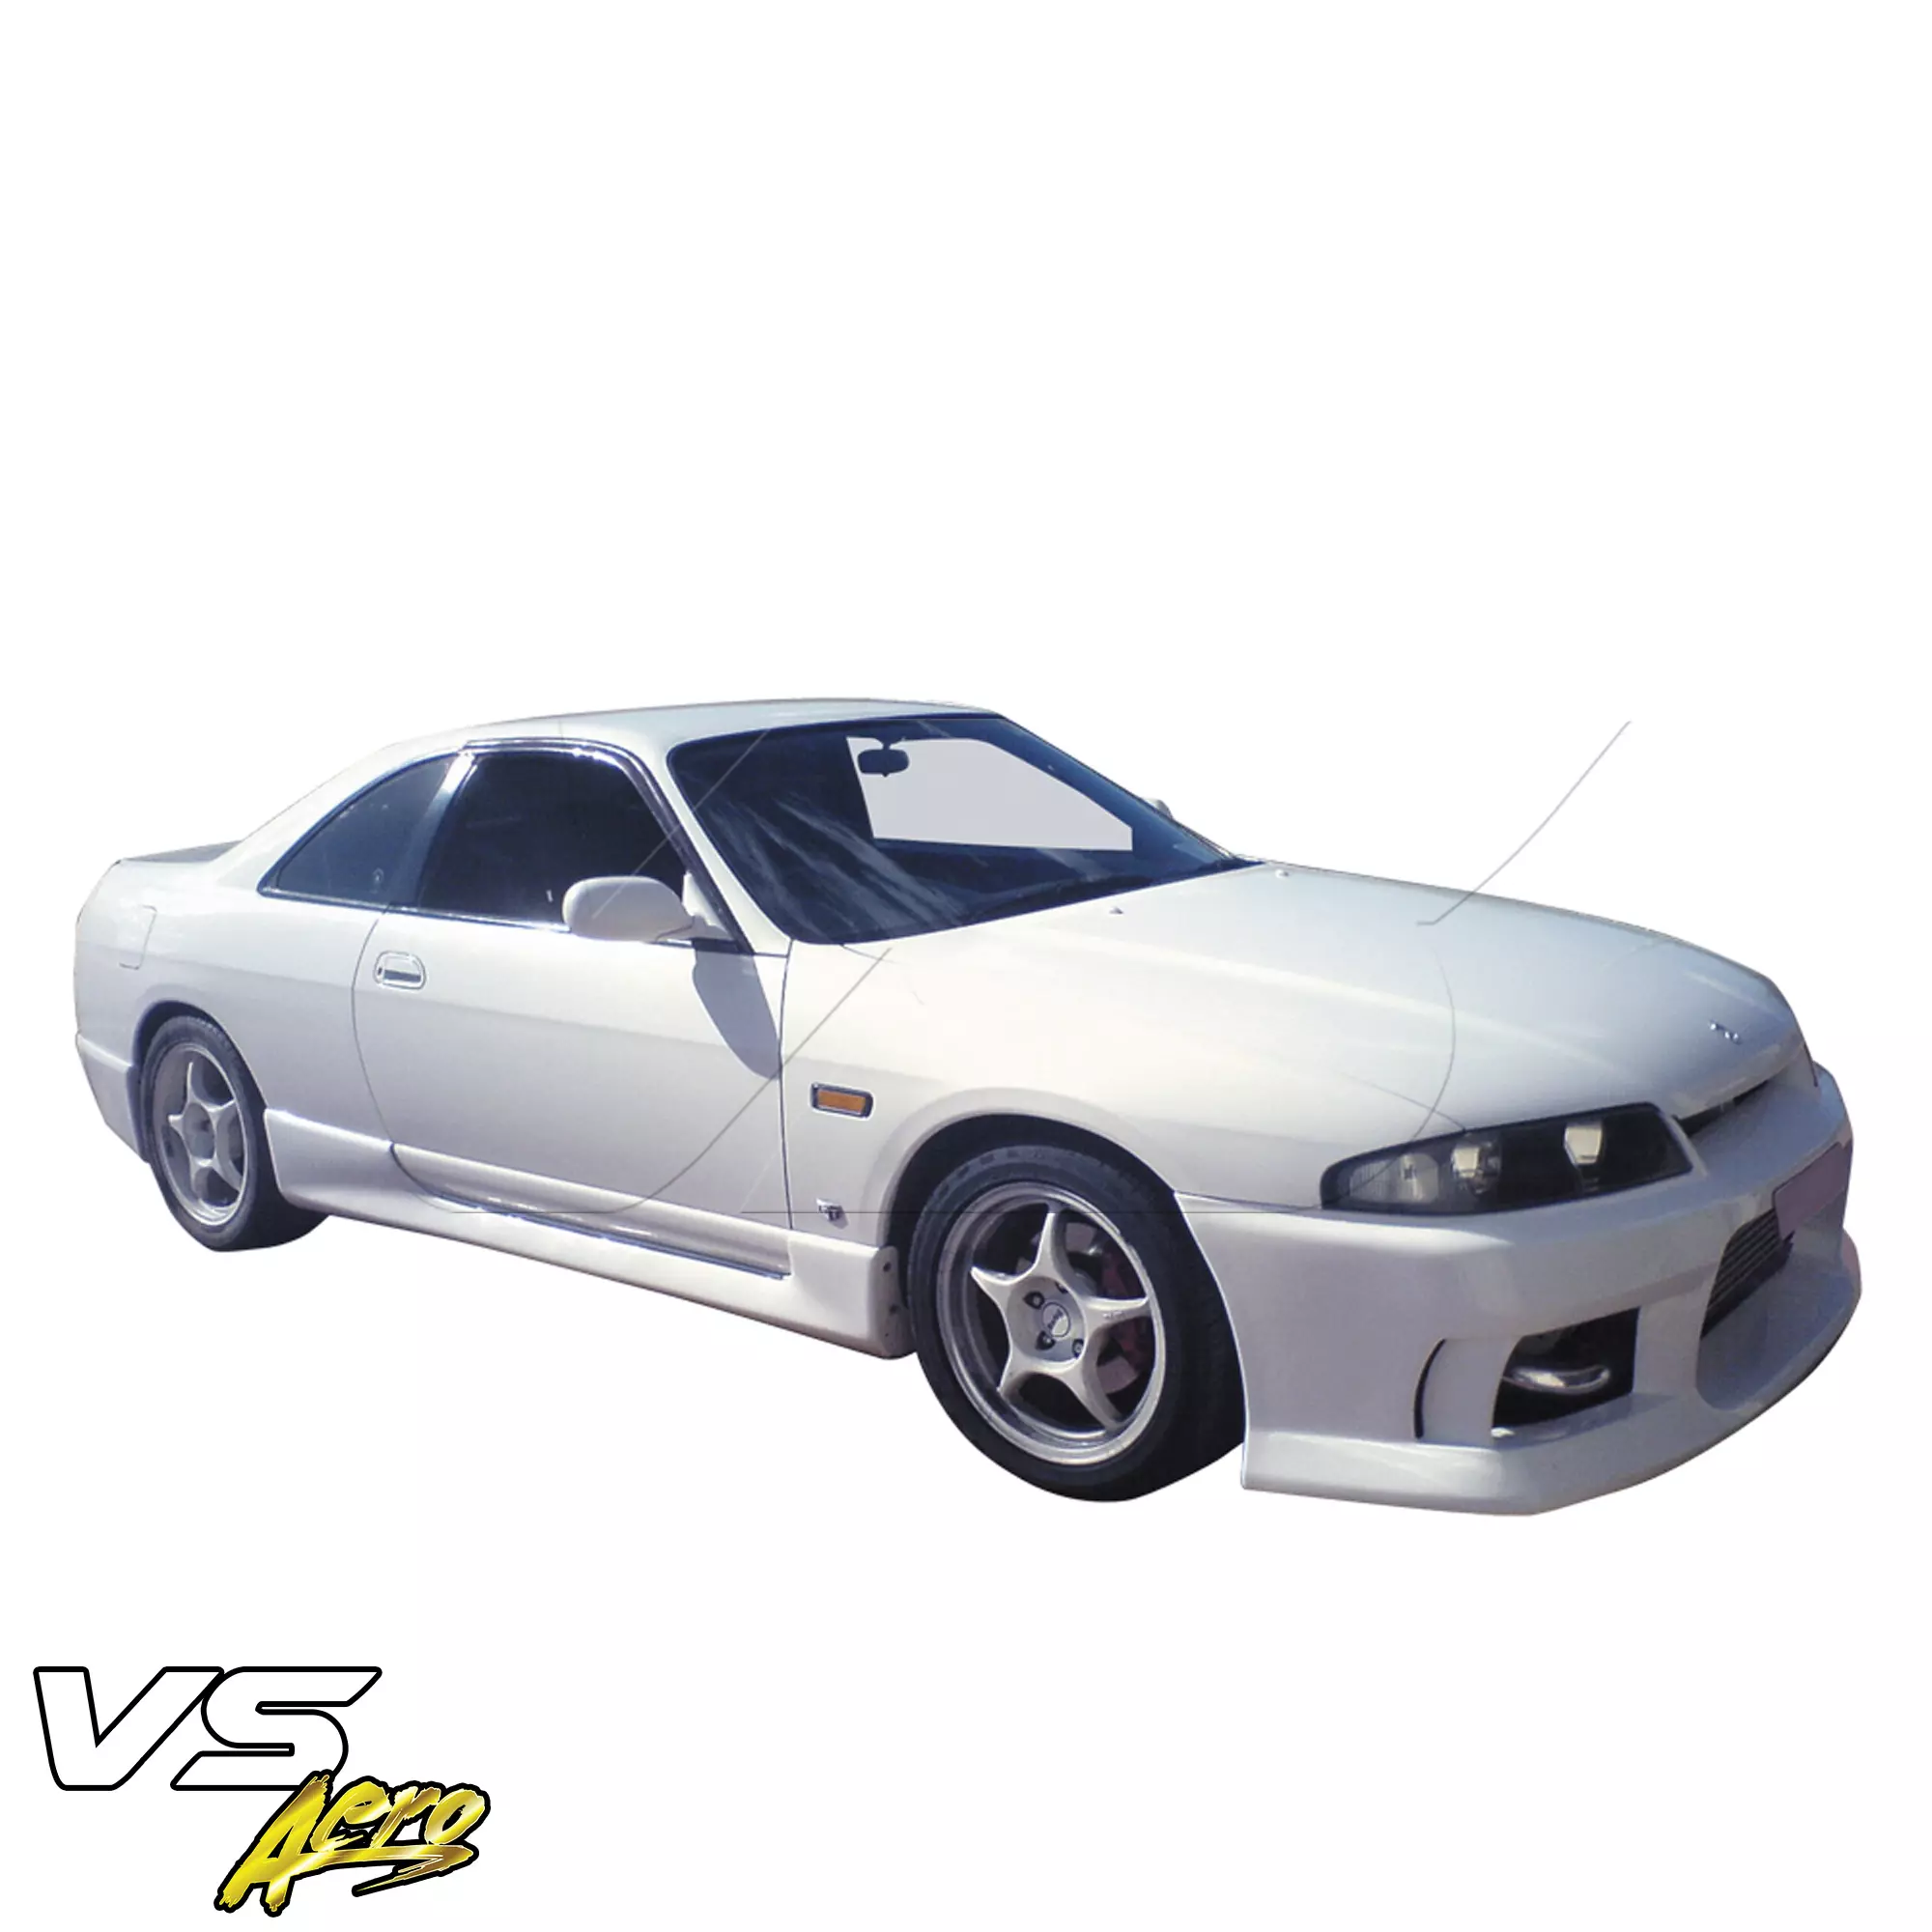 VSaero FRP MSPO v2 Body Kit 4pc > Nissan Skyline R33 GTS 1995-1998 > 2dr Coupe - Image 1